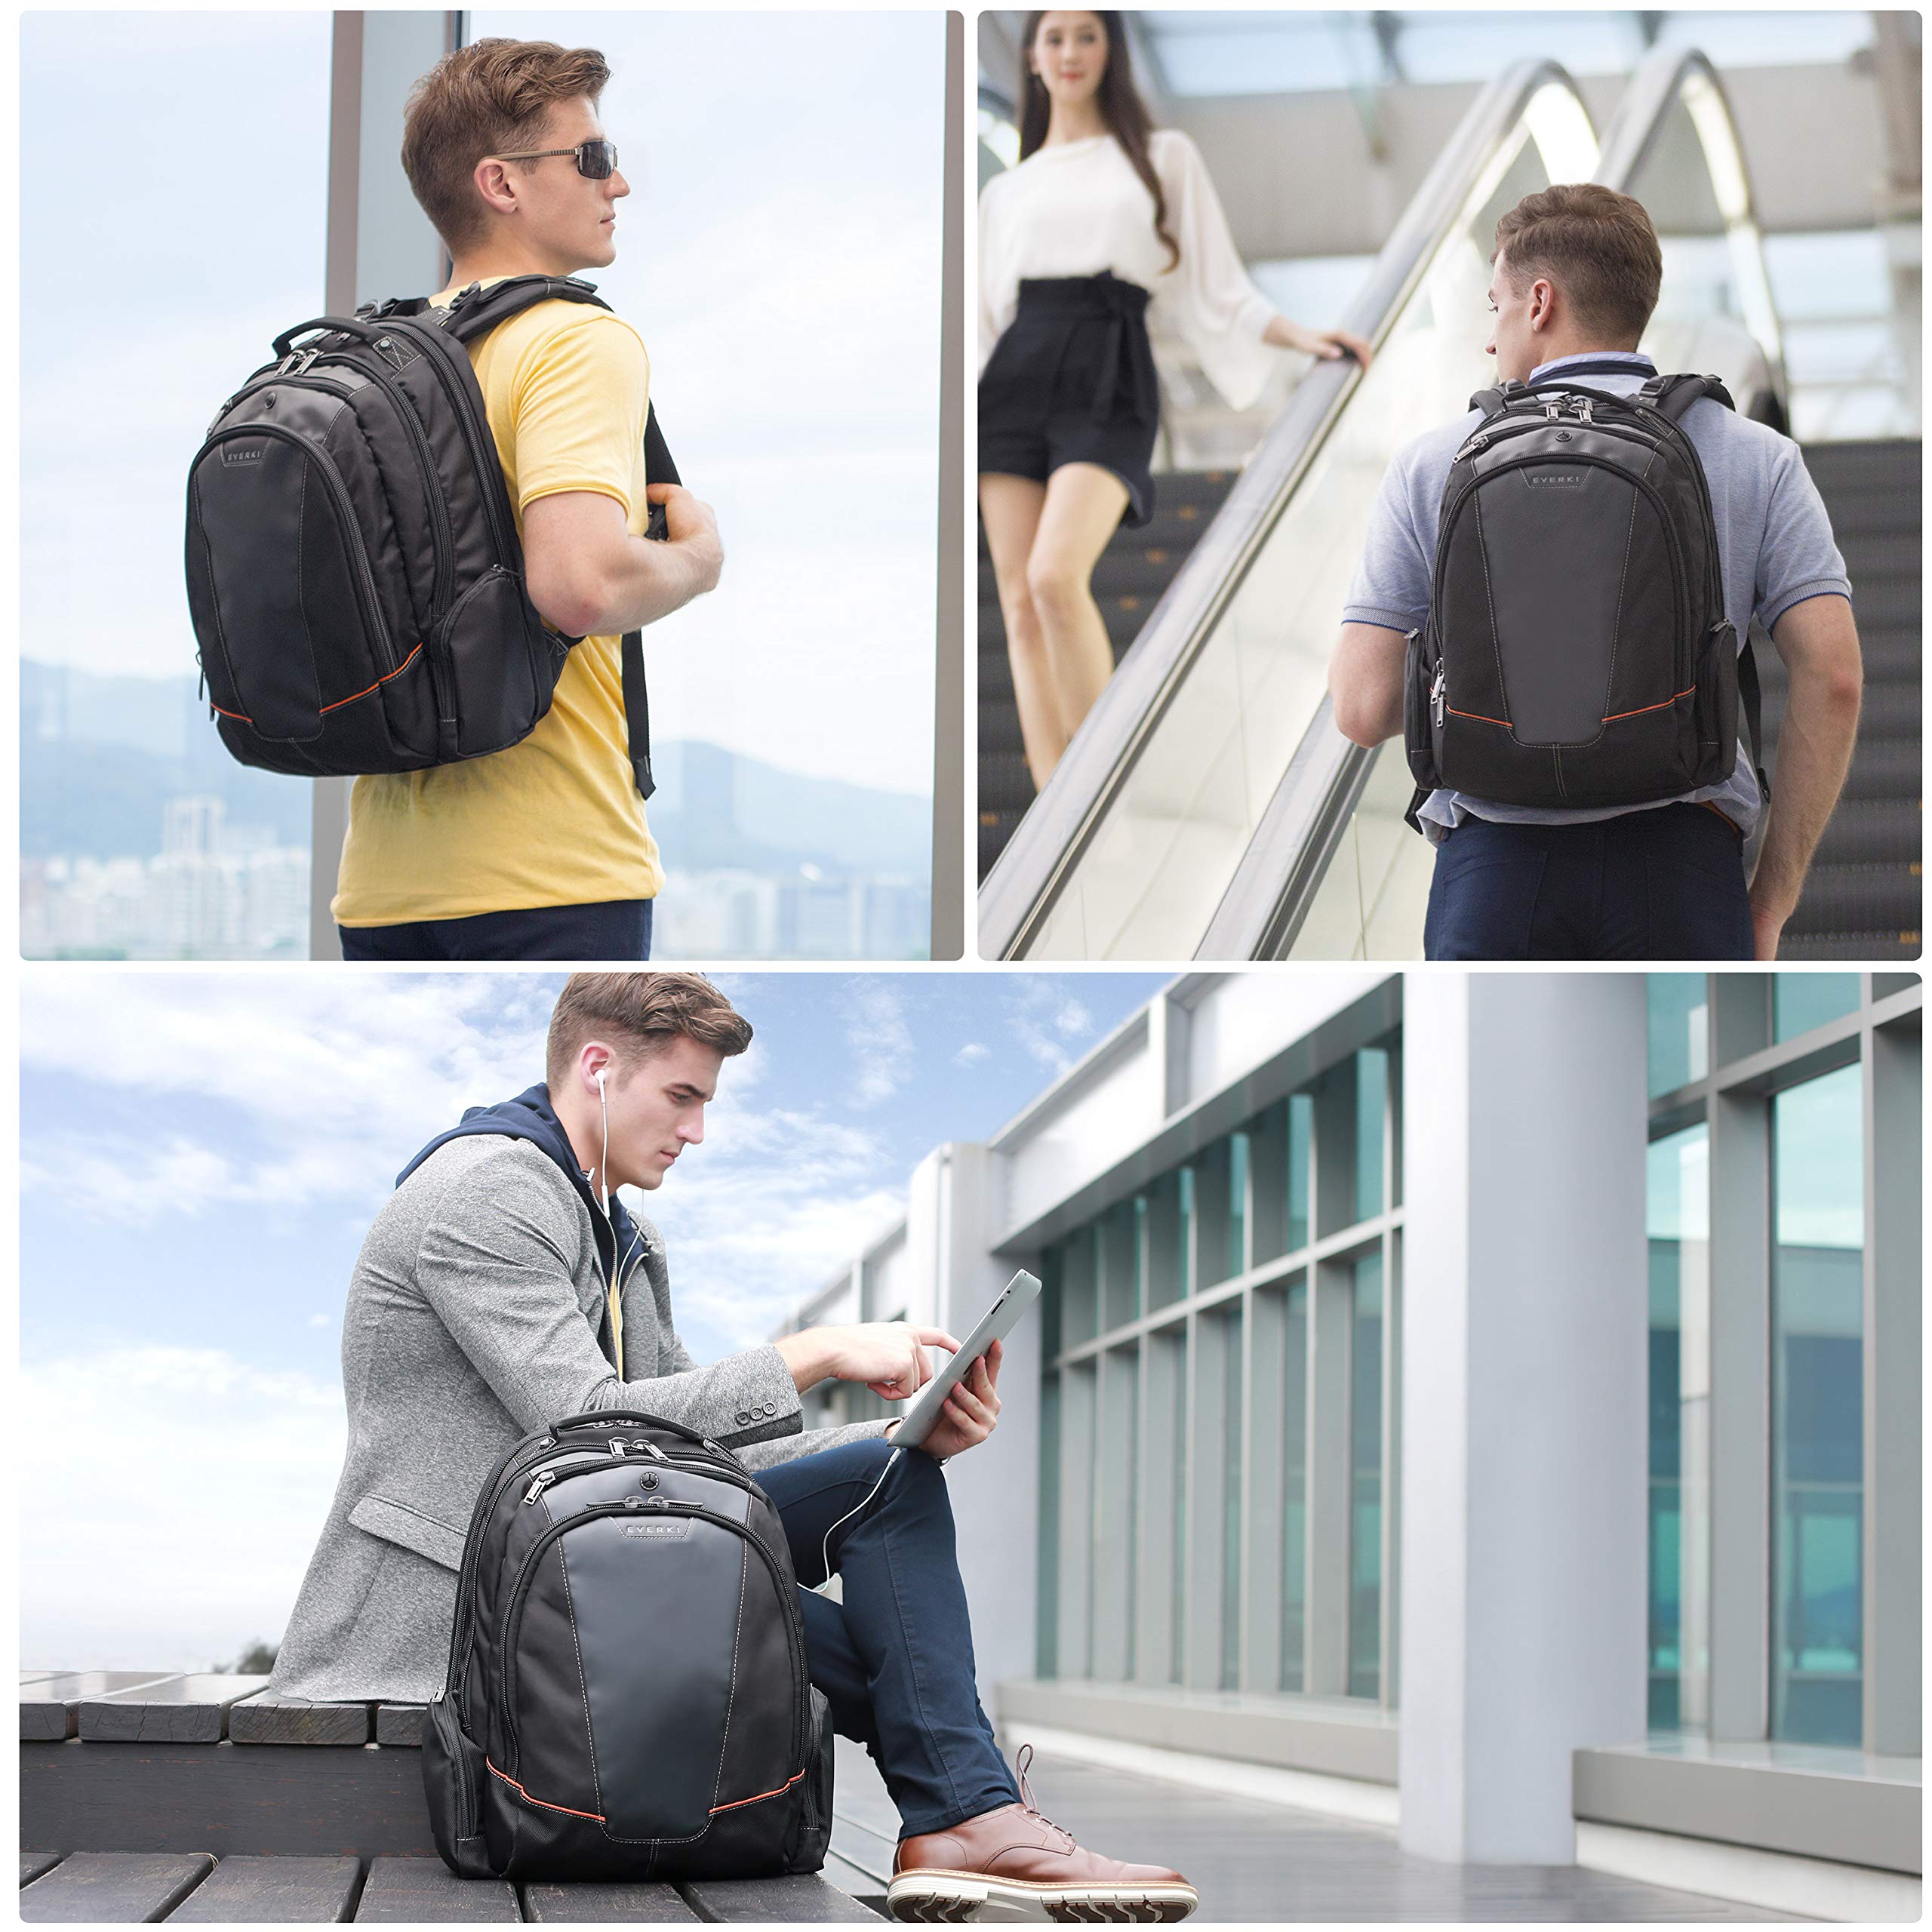 EVERKI Flight Business 15.6-Inch or 16-Inch Laptop Backpack, Travel Friendly, Men or Women, Organized, Black (EKP119)